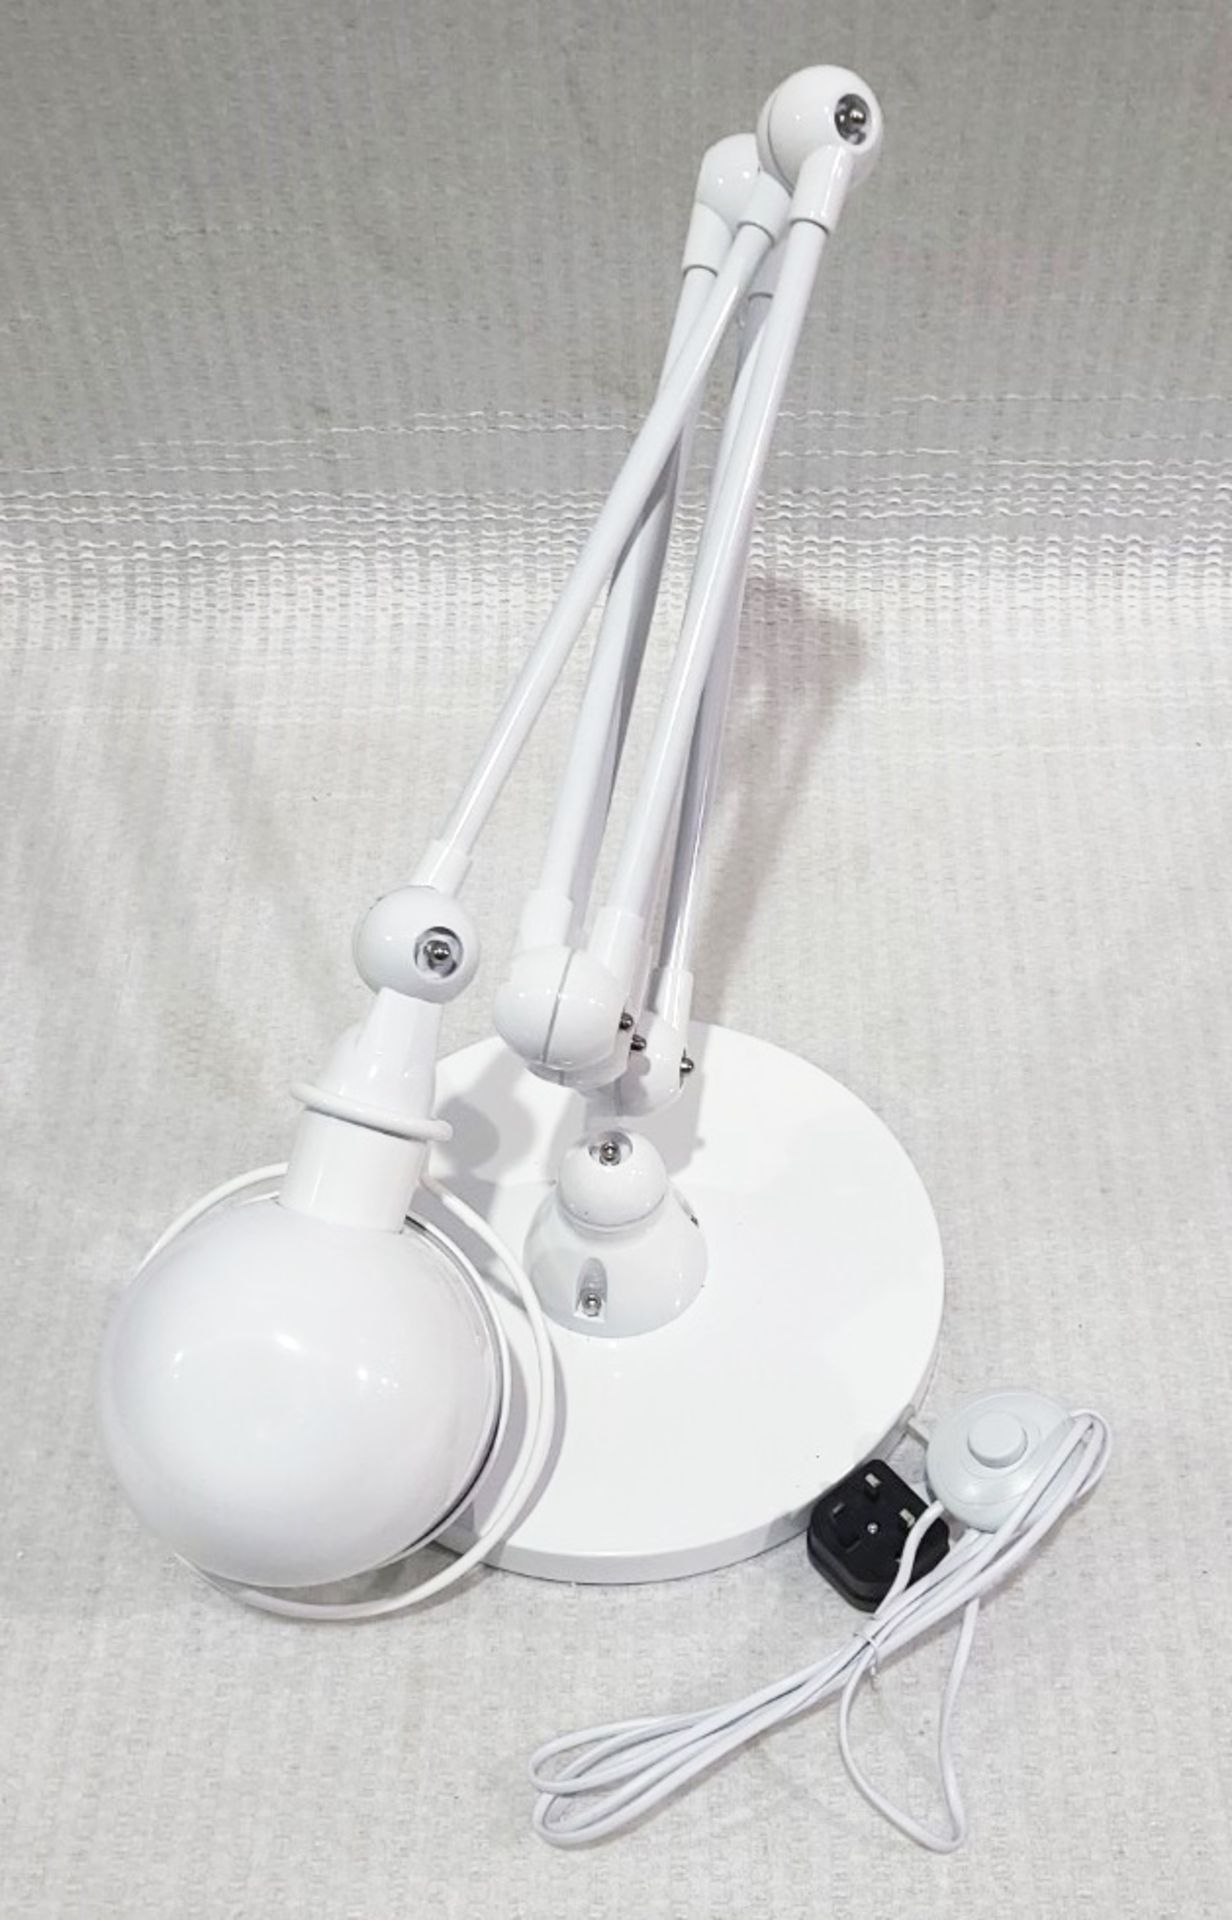 1 x BLUESUNTREE 'Jielde' Glossy White Steel Loft Floor Lamp With Six Adjustable Arms - Image 4 of 10